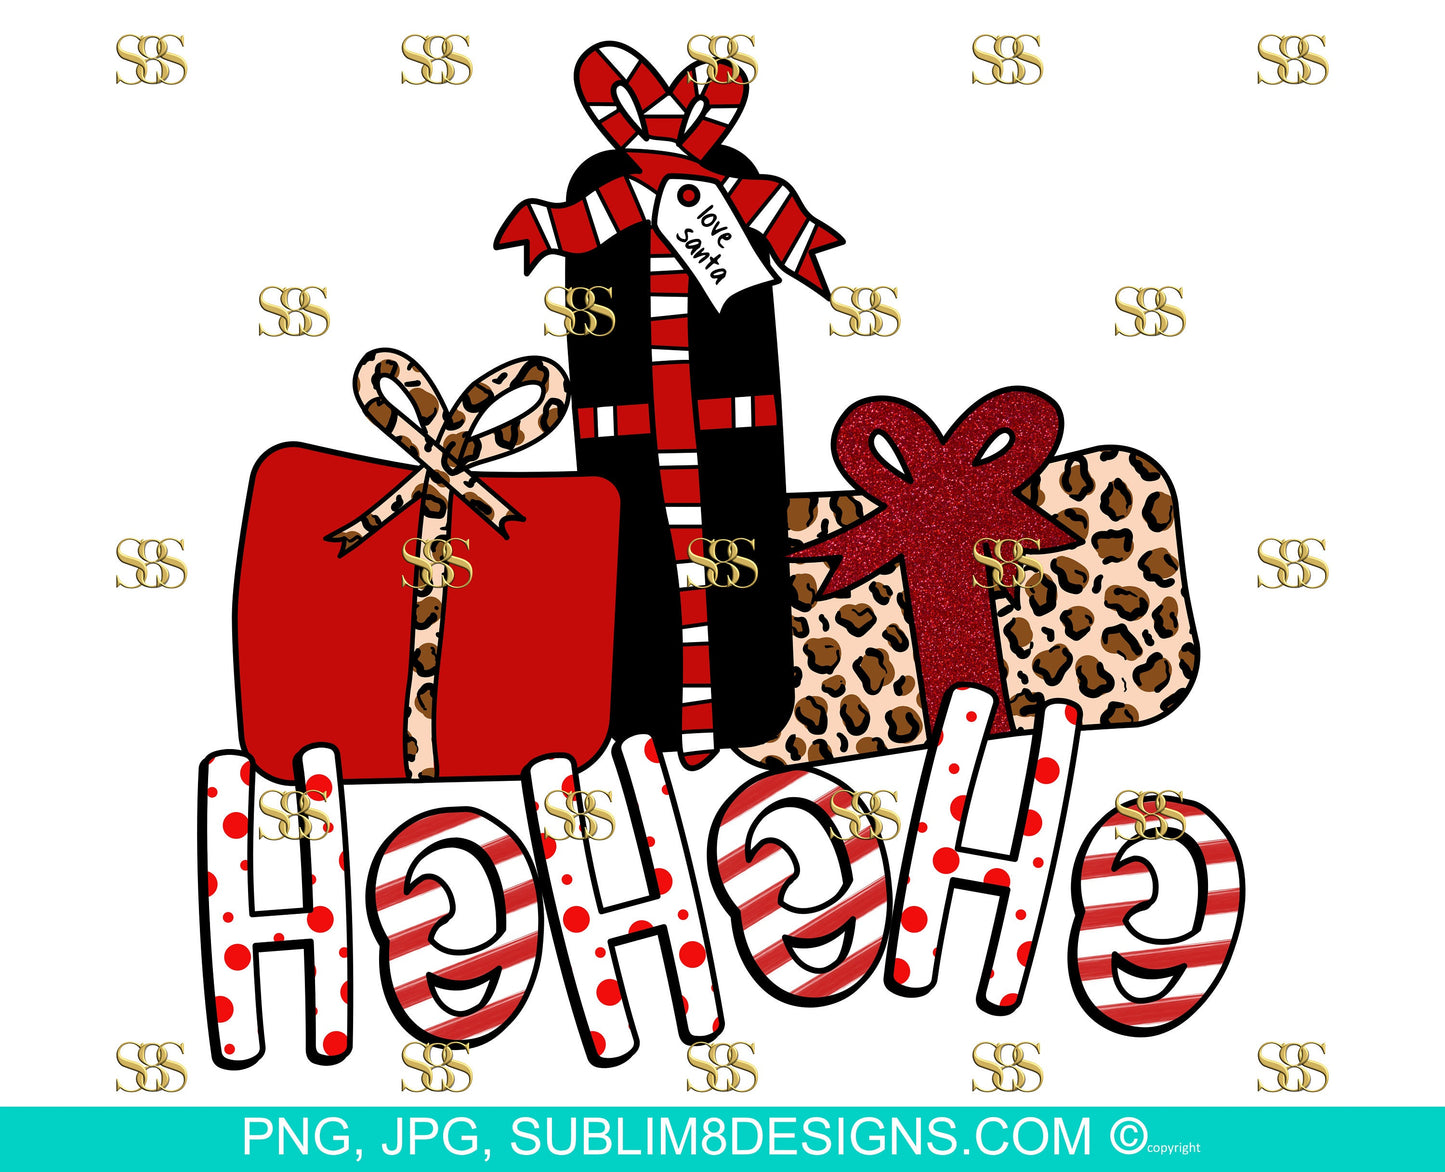 Ho ho ho Christmas Presents - Digital Holiday Designs - Christmas Digital Design - Christmas Presents PNG and JPG ONLY